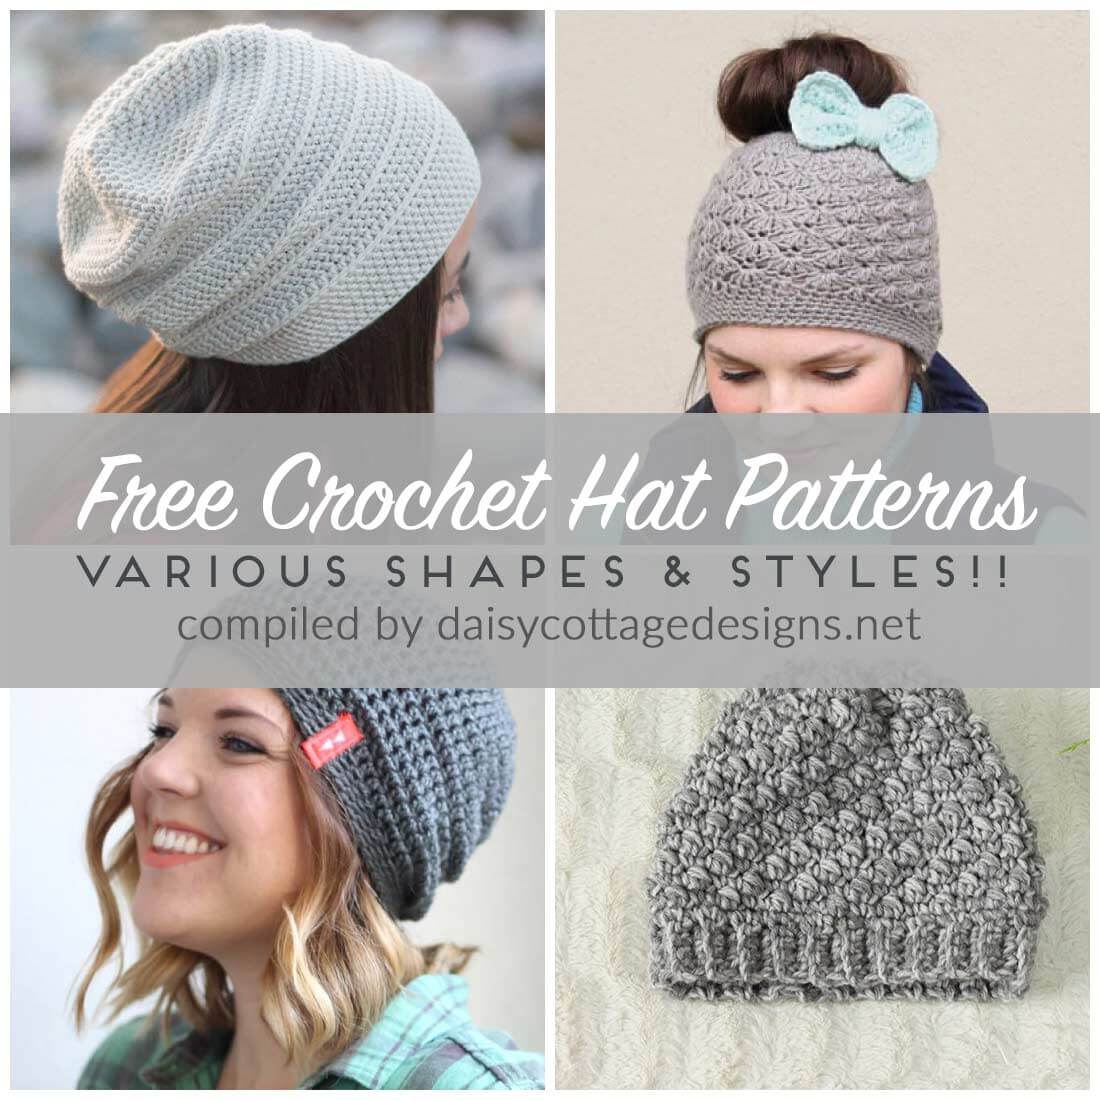 Free Crochet Pattern Free Crochet Hat Patterns Daisy Cottage Designs